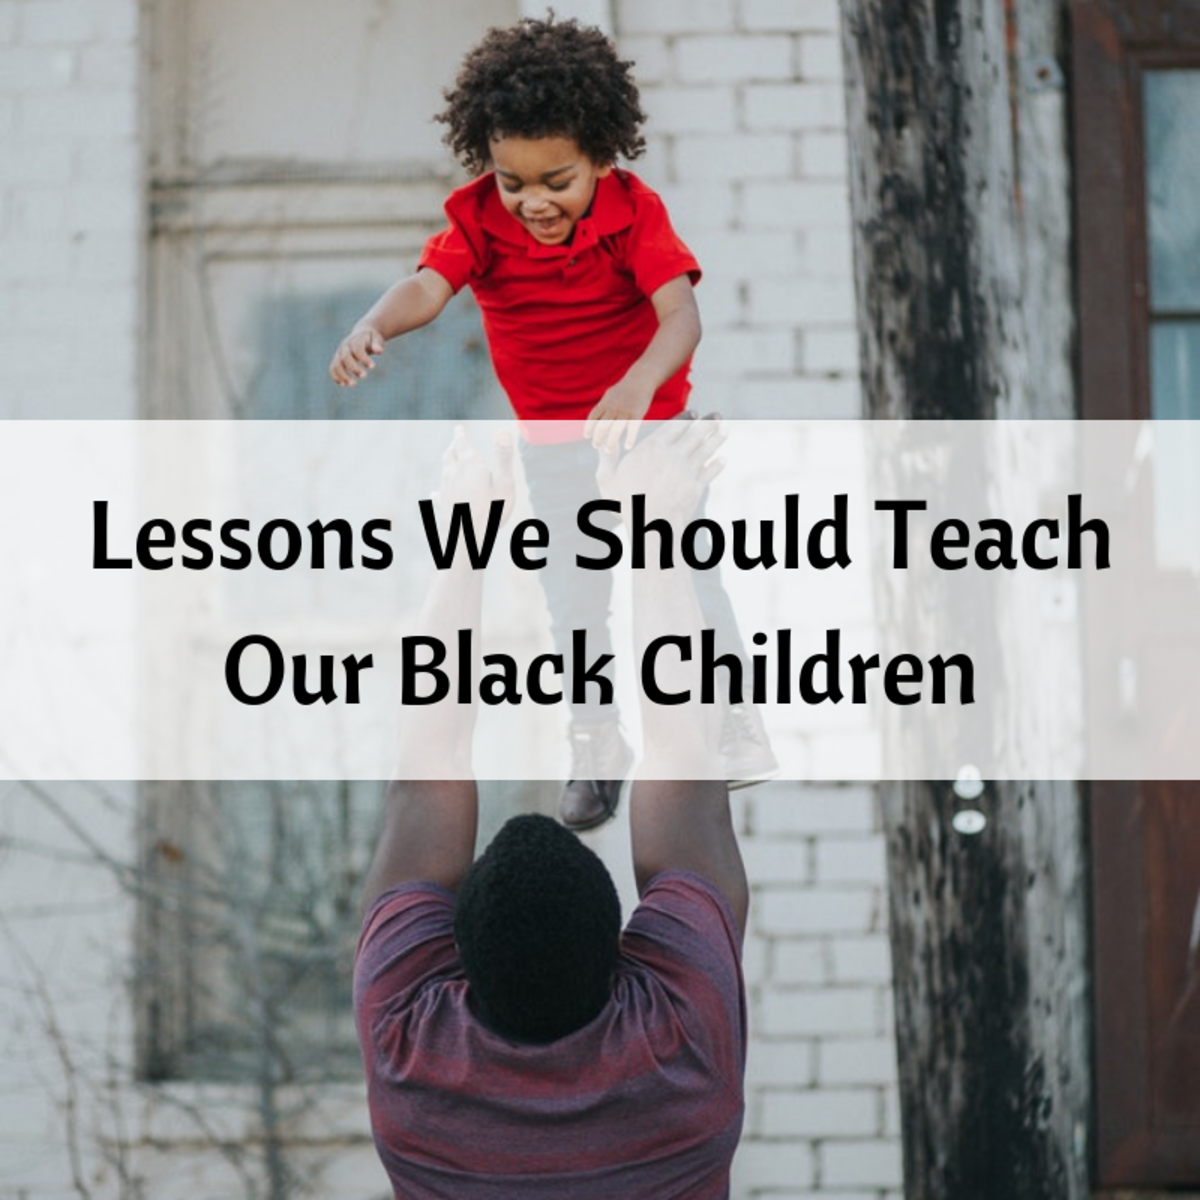 5 Lessons We Should Teach Our Black Children